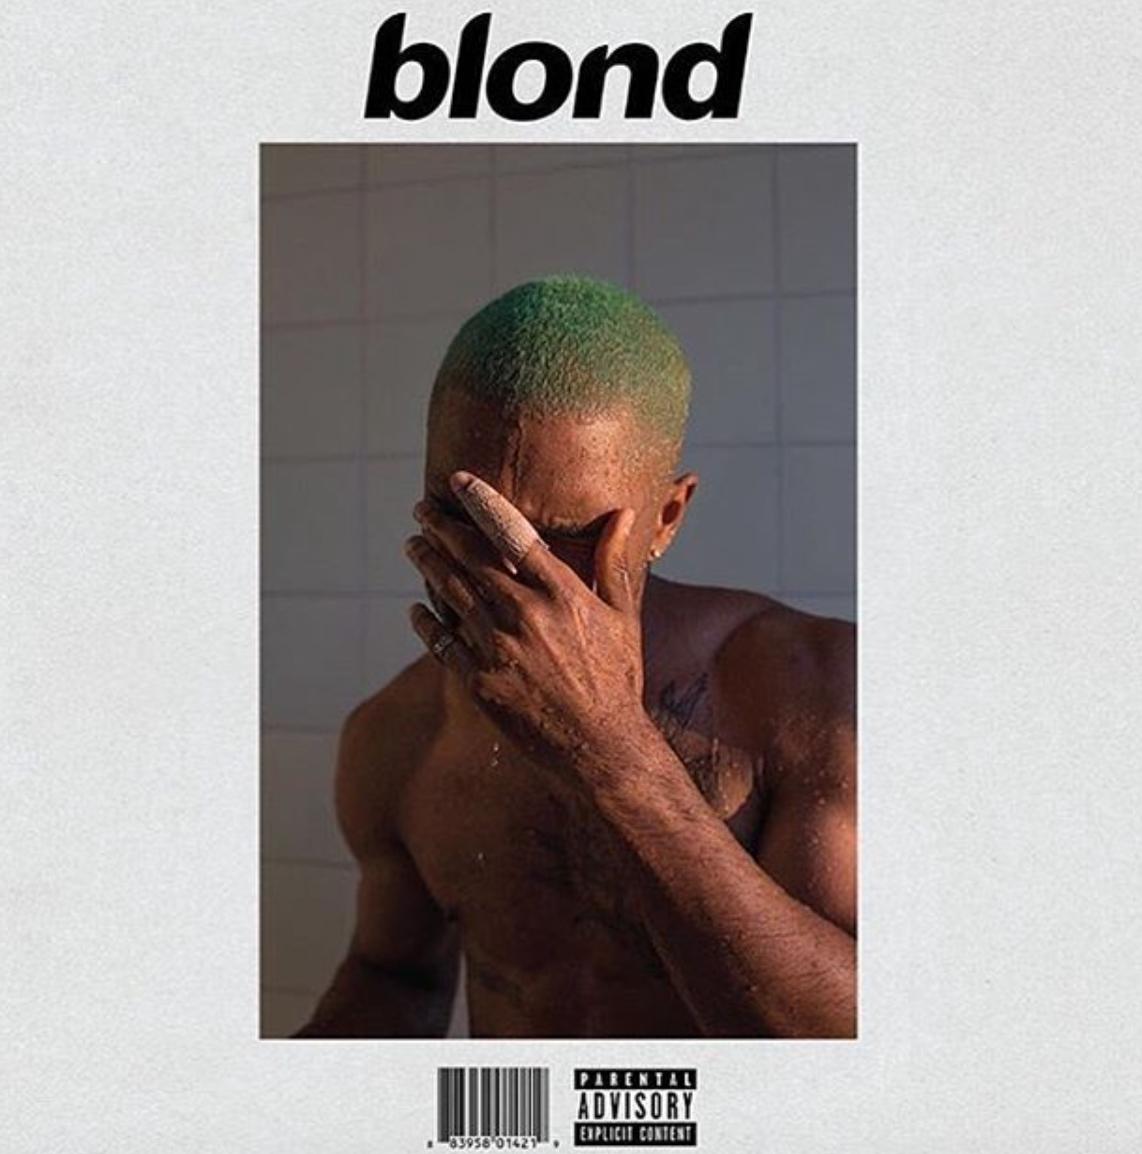 frank ocean blonde album you tube